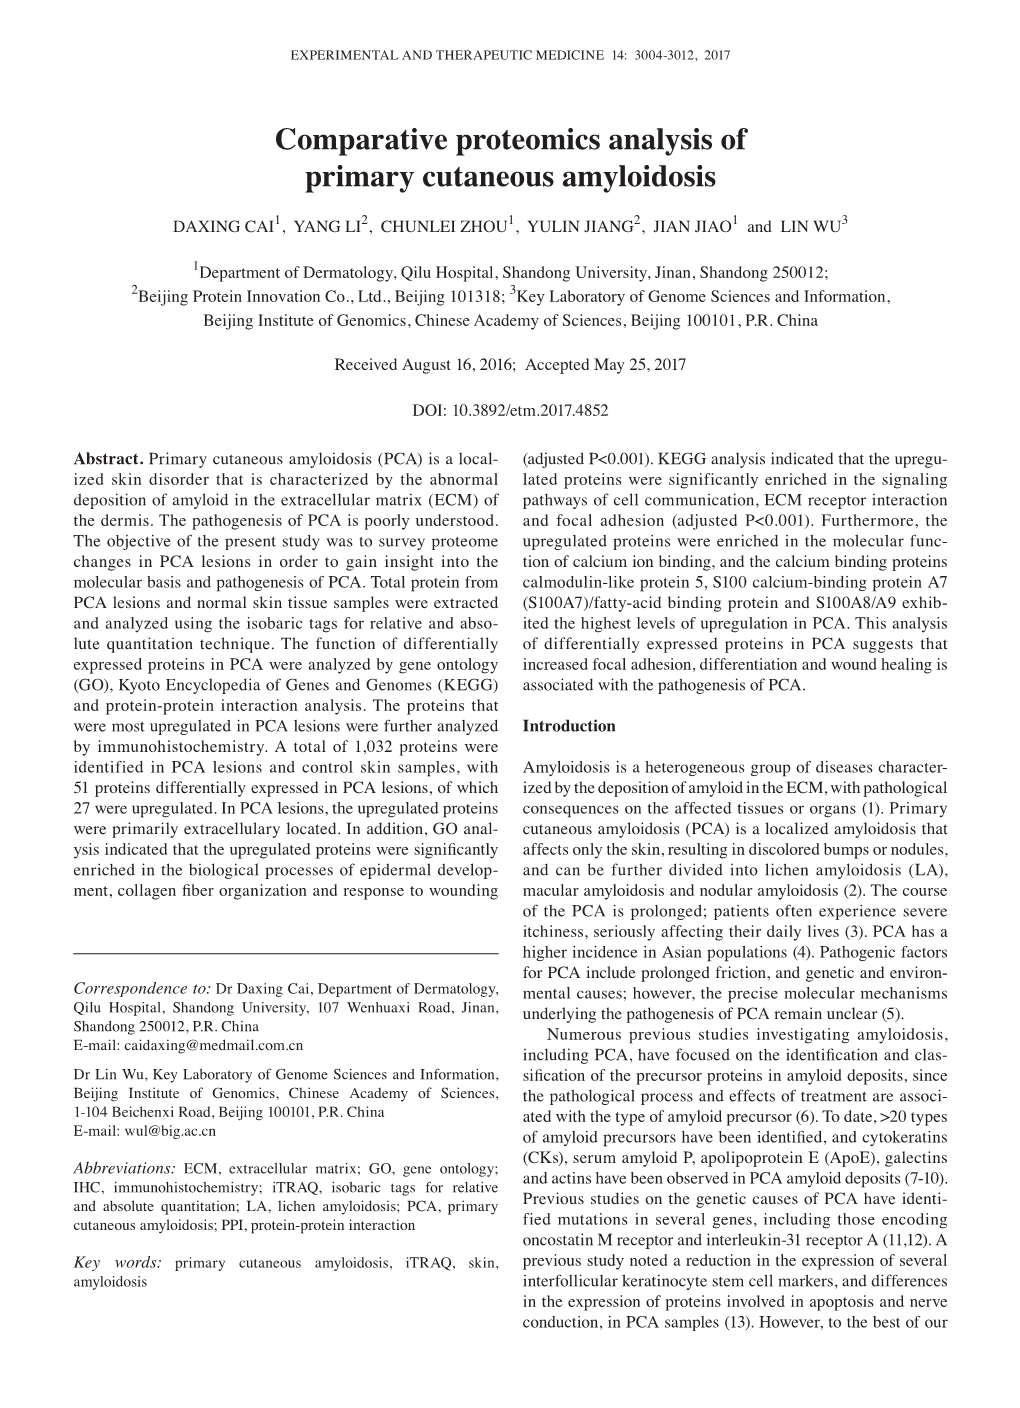 Comparative Proteomics Analysis of Primary Cutaneous Amyloidosis